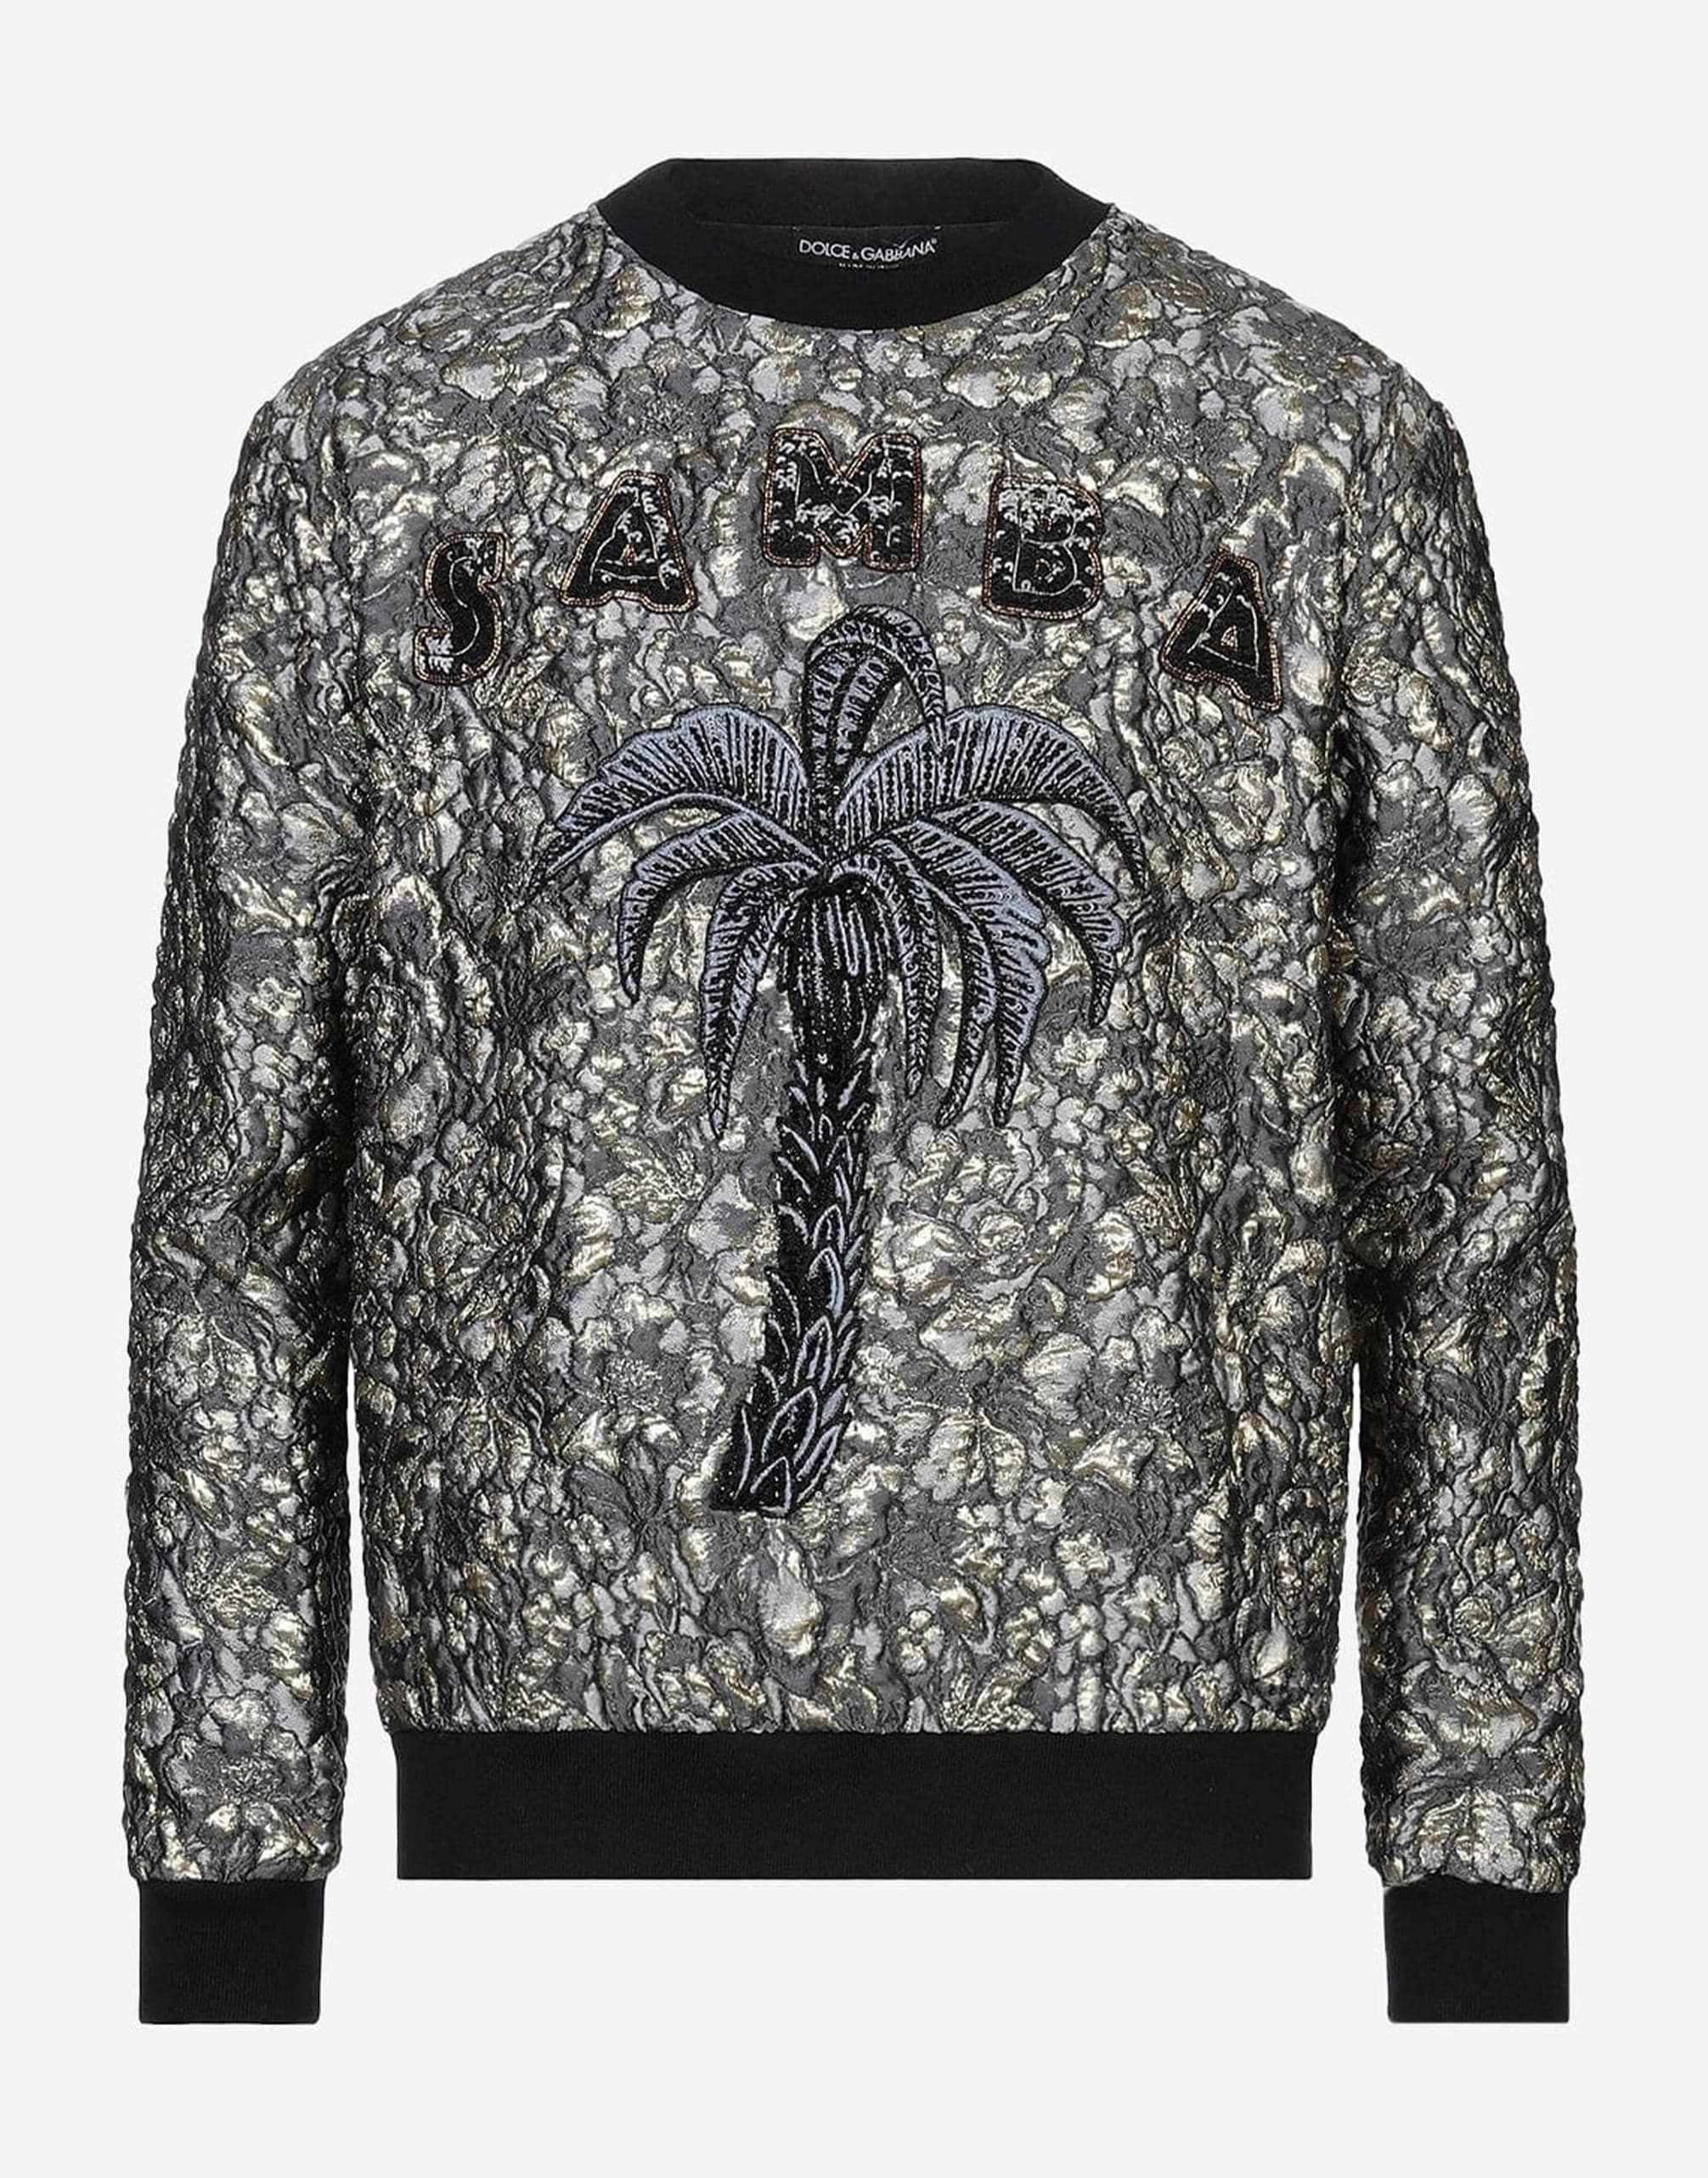 Dolce & Gabbana Jacquard Samba-Embellished Sweatshirt